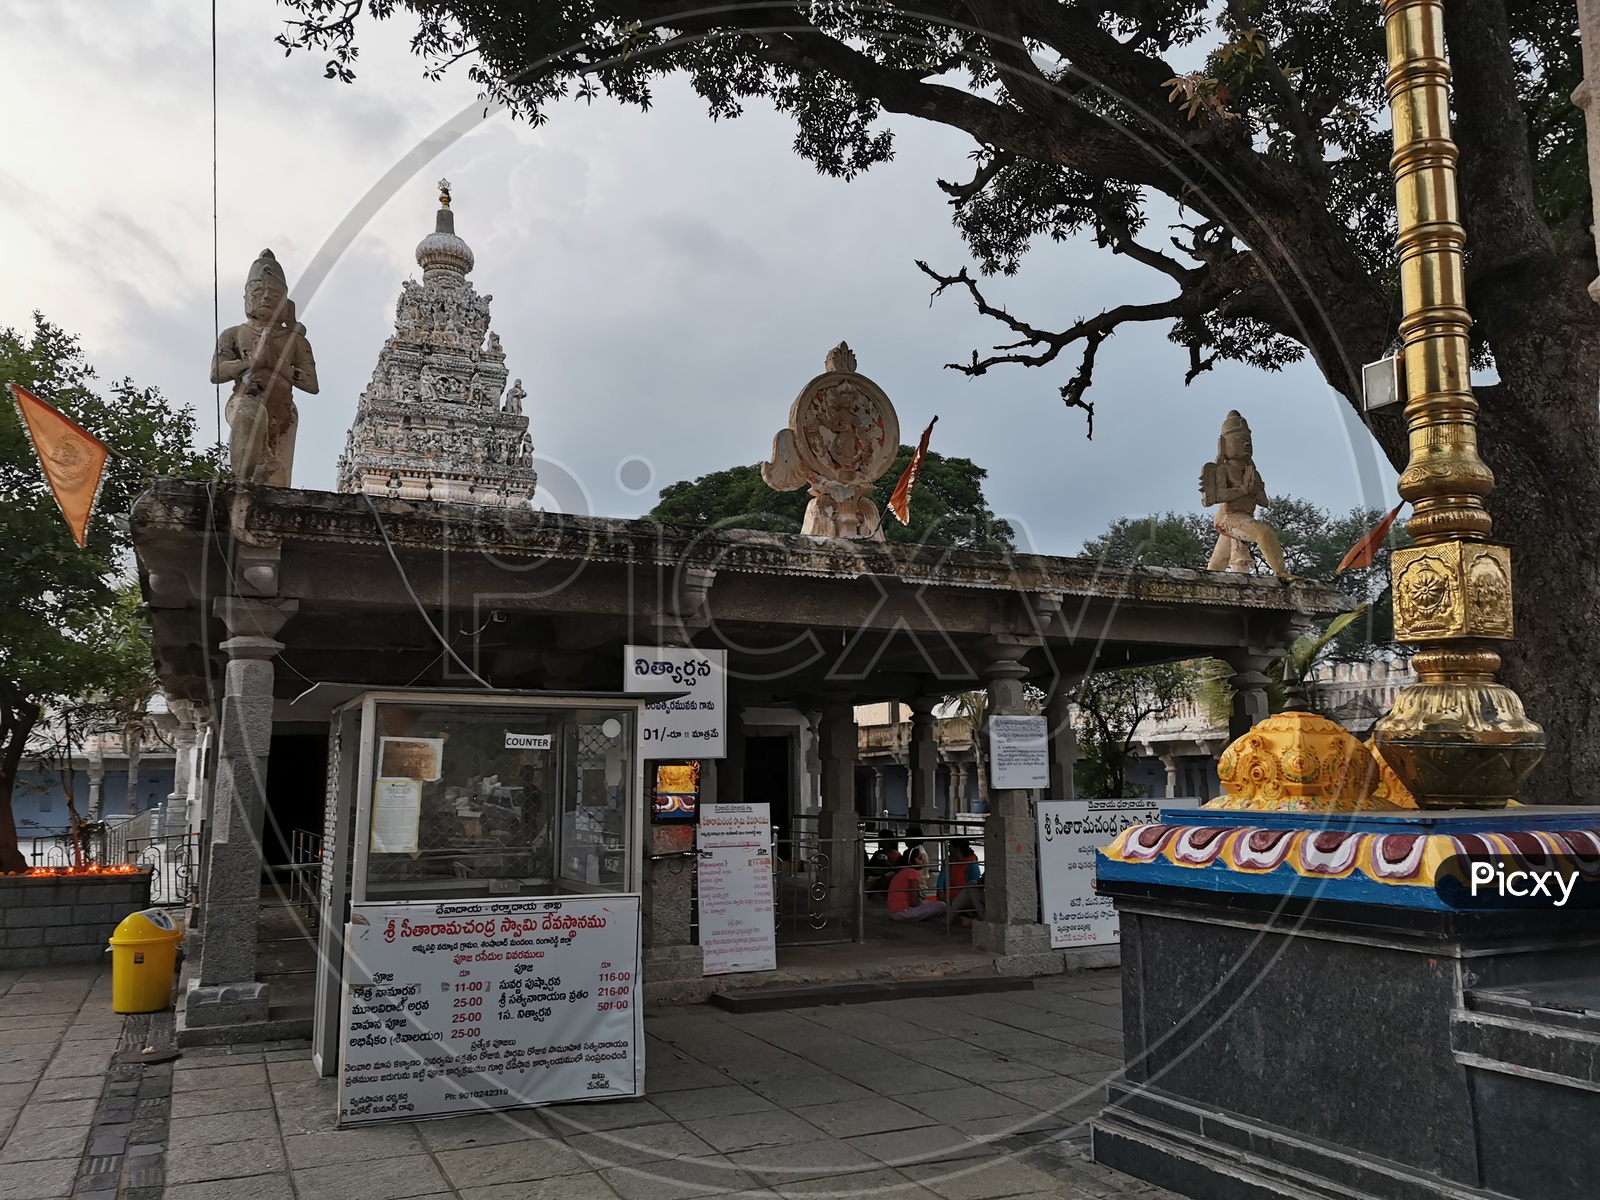 Sri Seetha Rama Chandra Swamy Temple, Ammapally